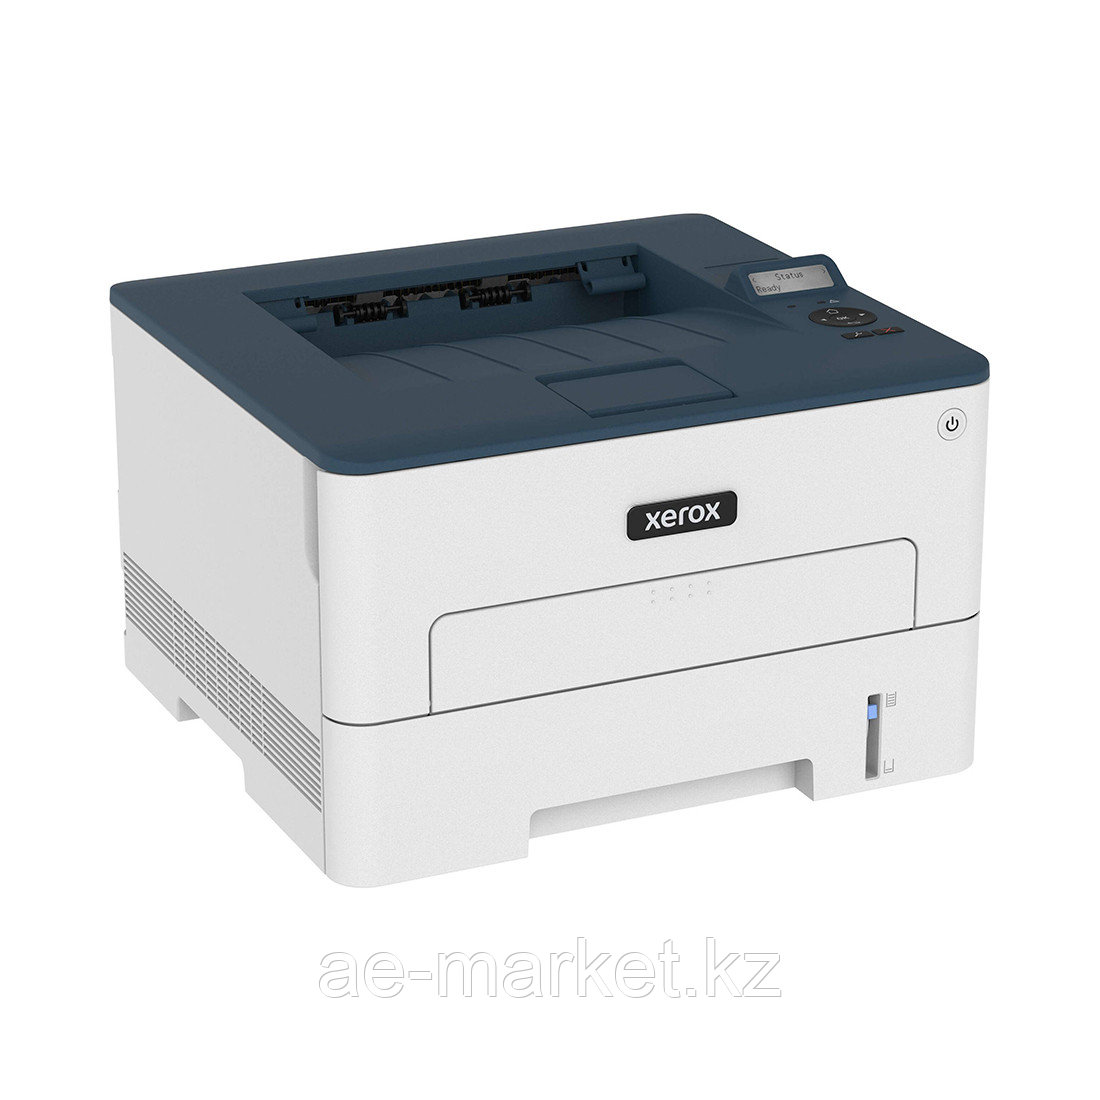 Монохромный принтер Xerox B230DNI, фото 1